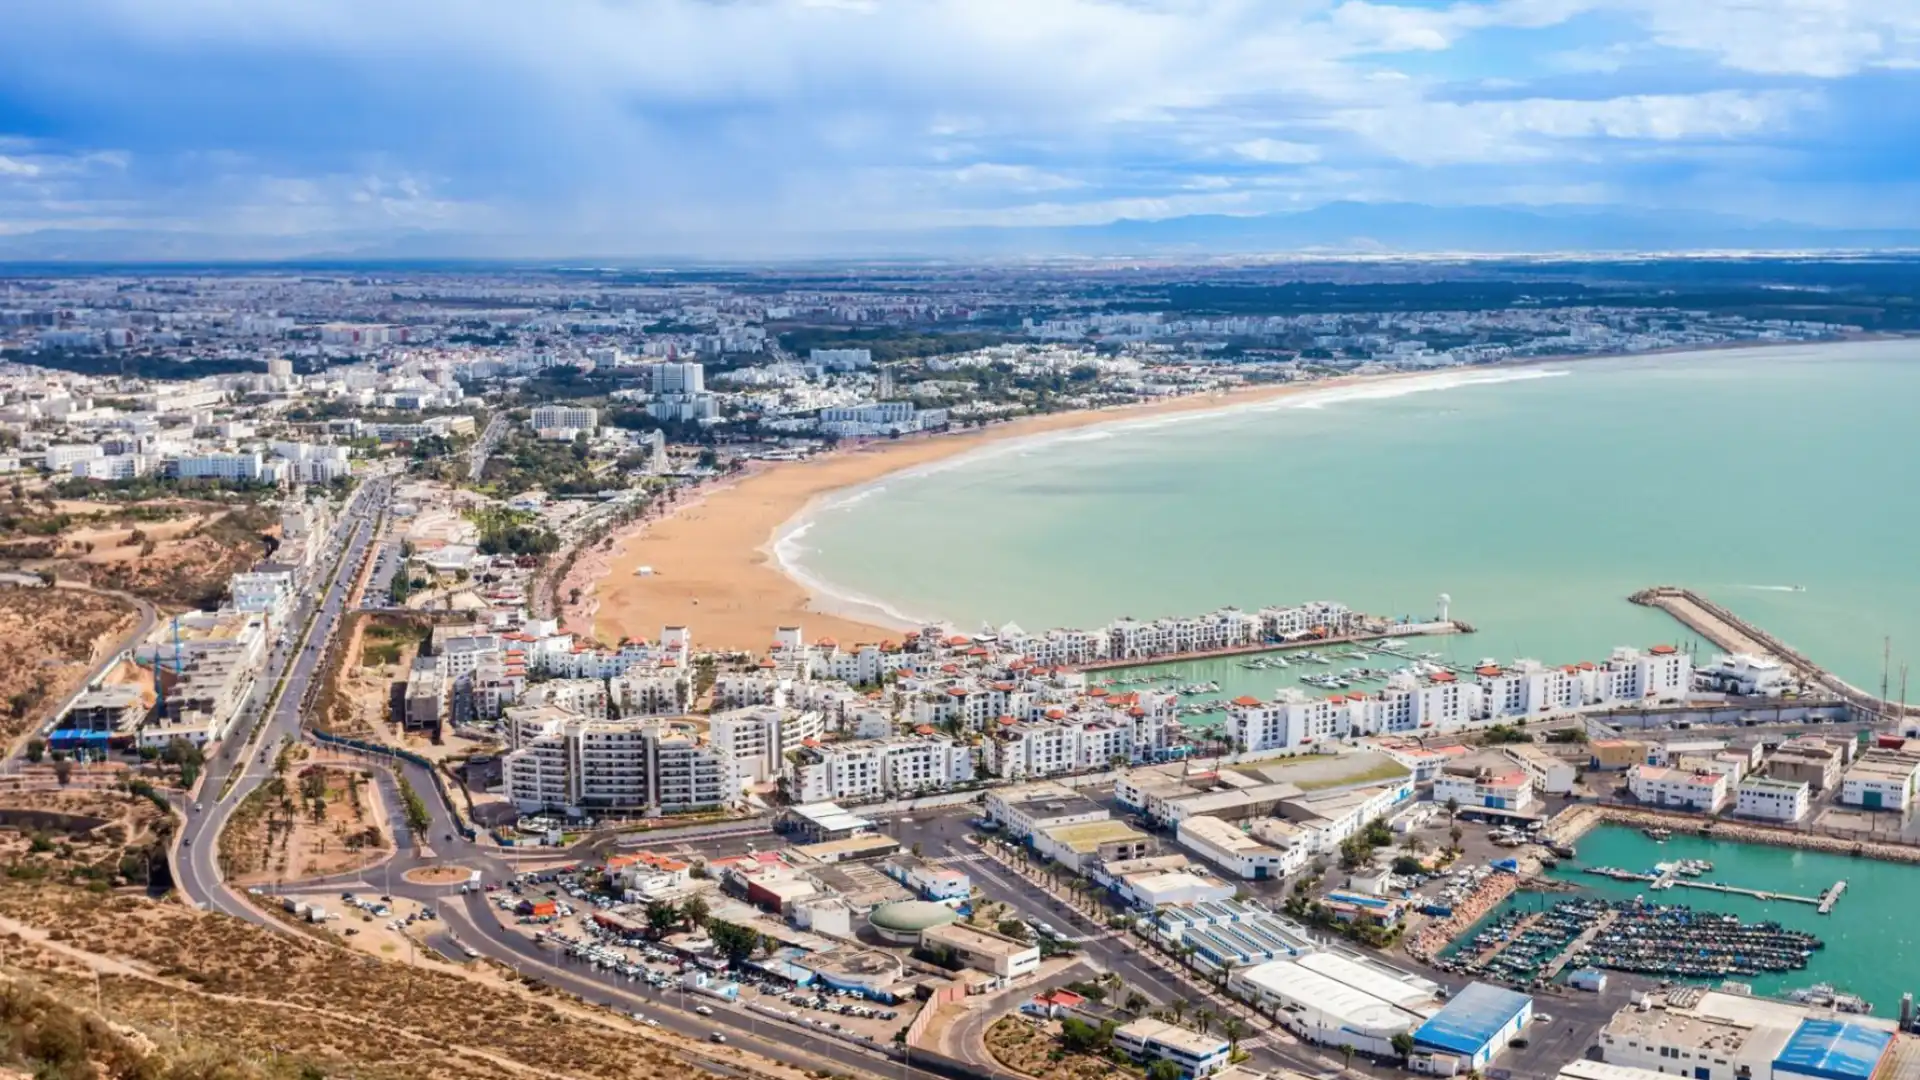 A Walking Tour of the Agadir Corniche